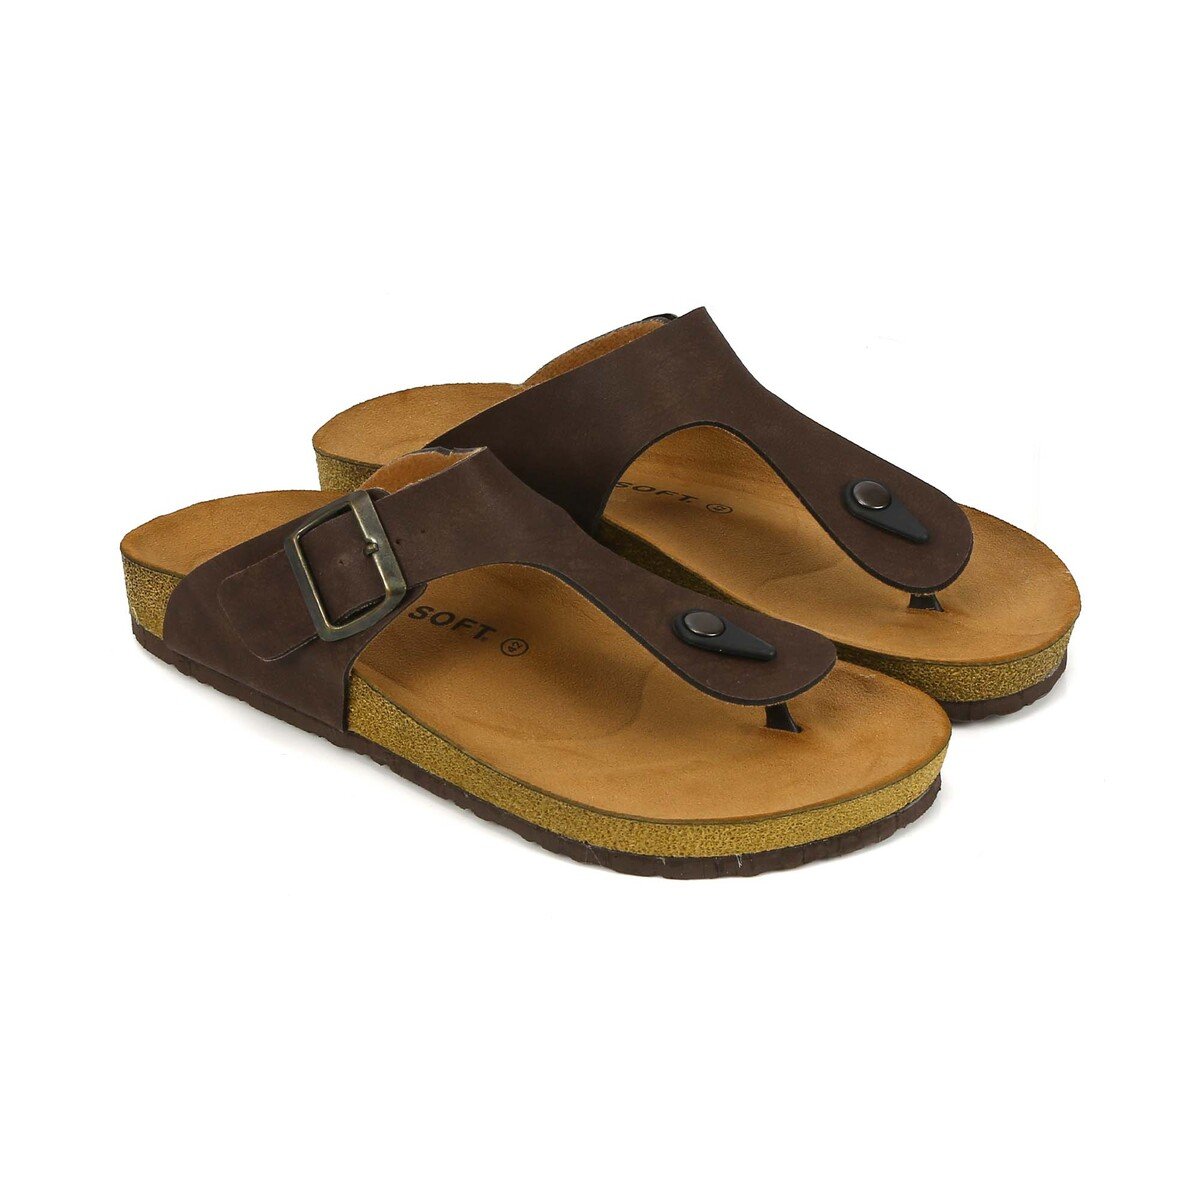 Fly Soft Men's Sandals S903-001 Brown, 45